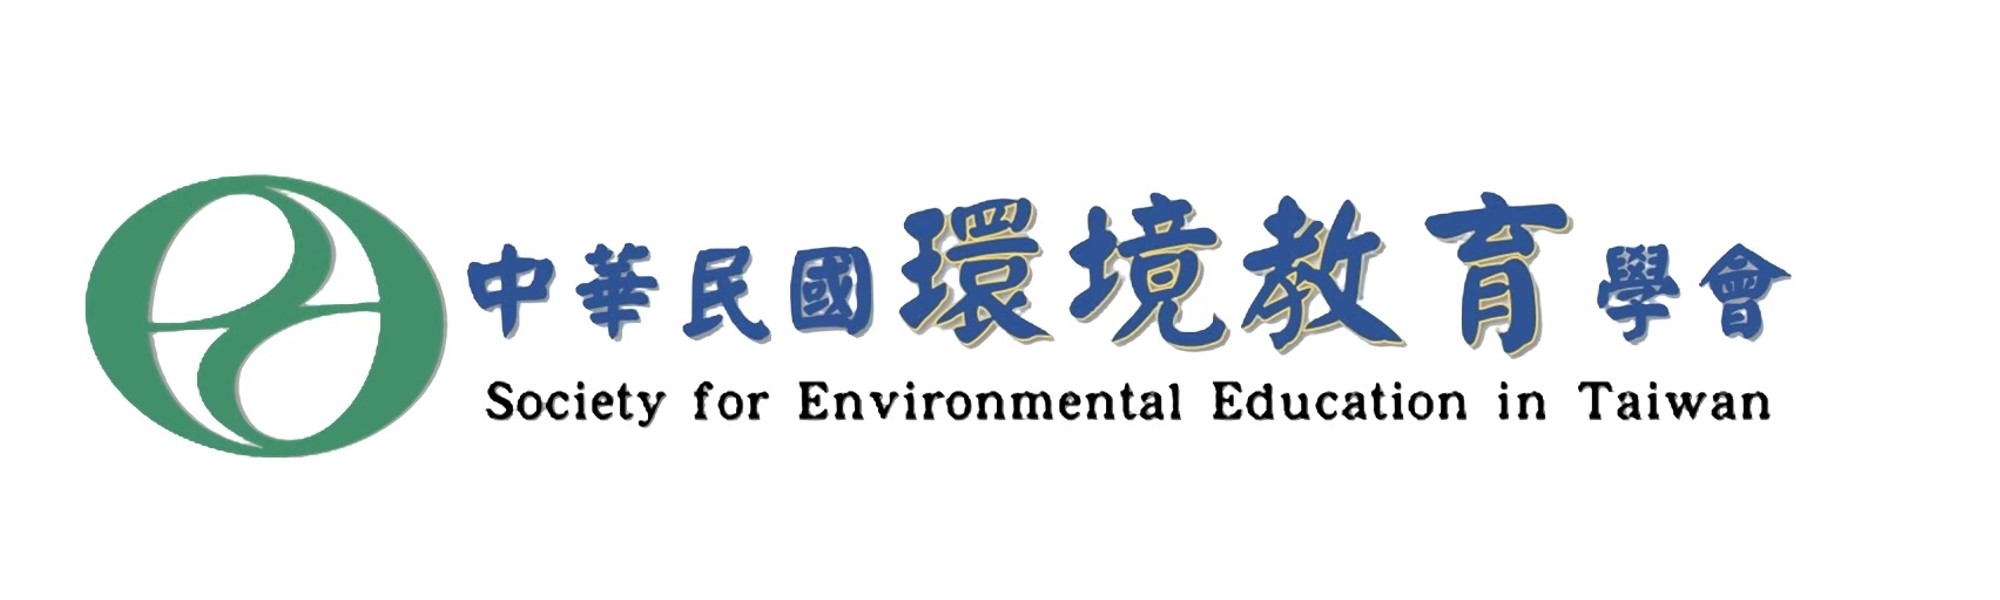 SOCIETY OF ENVIRONMENTAL EDUCATION IN TAIWAN